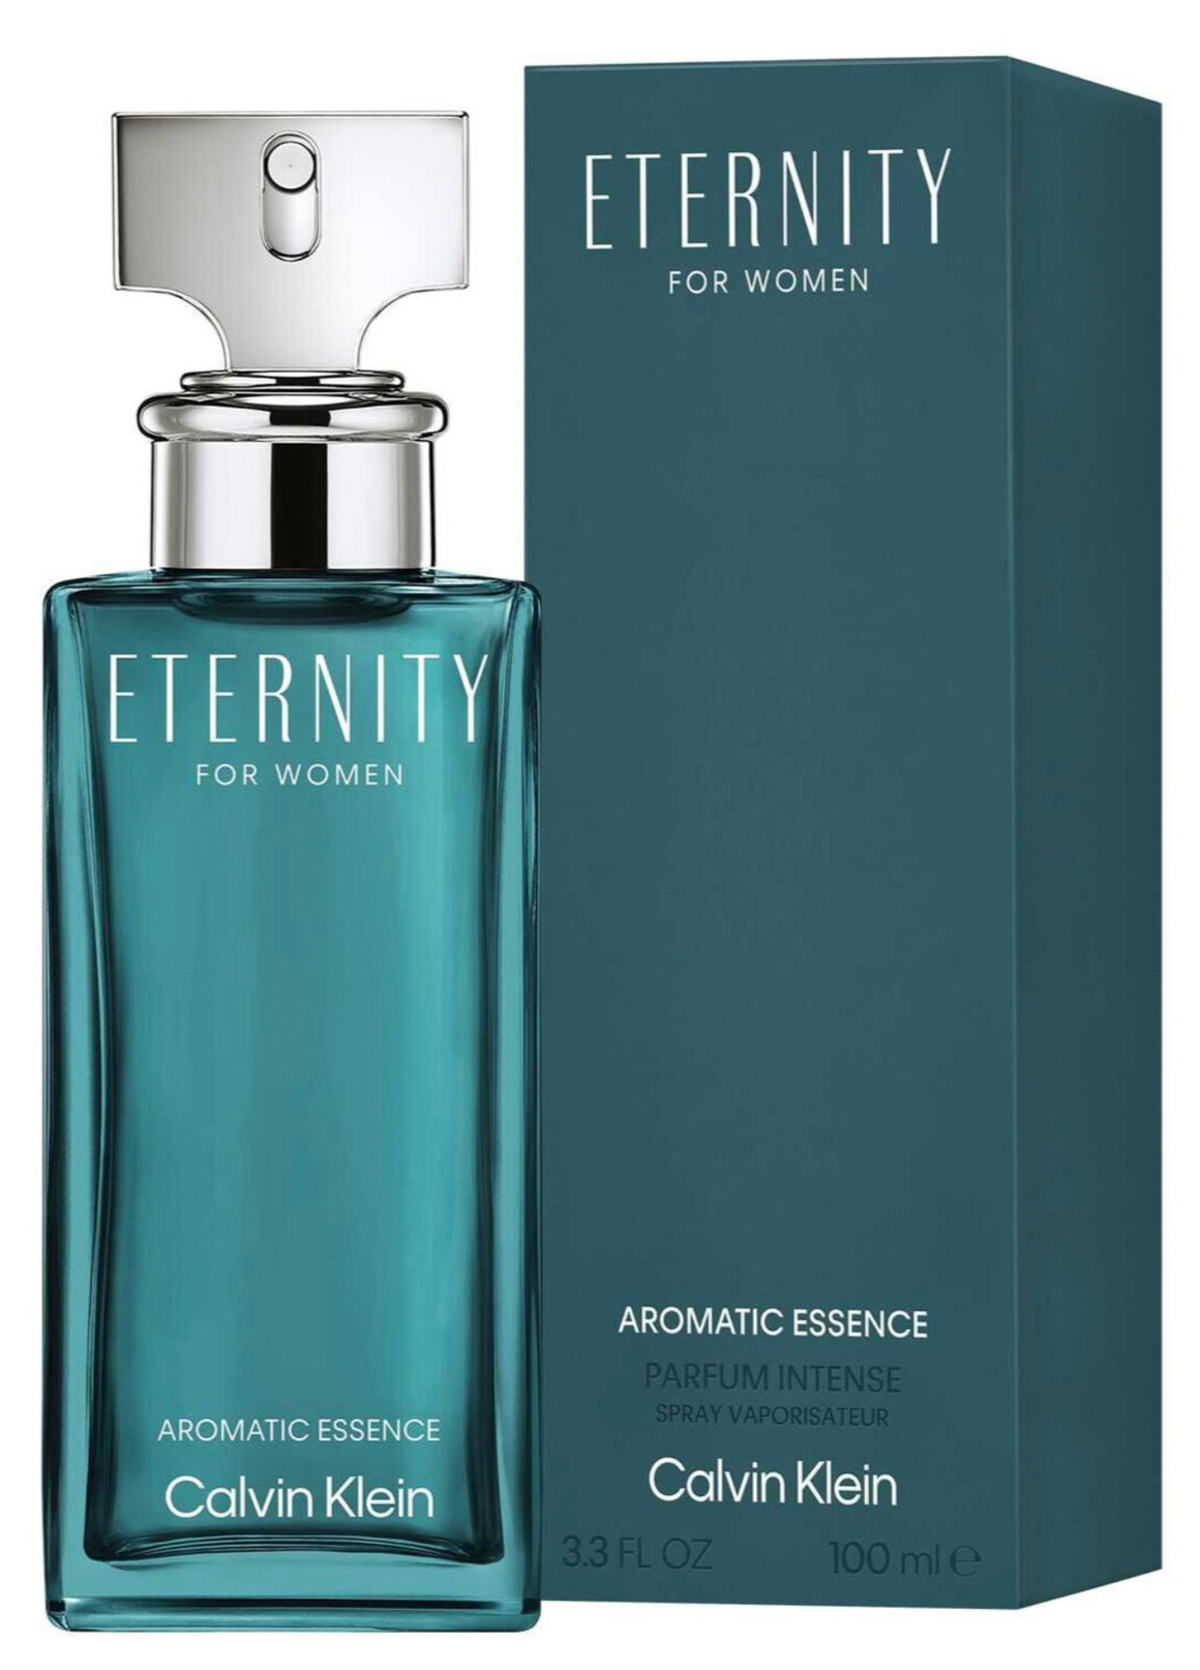 Eternity for Women Aromatic Essence - Calvin Klein